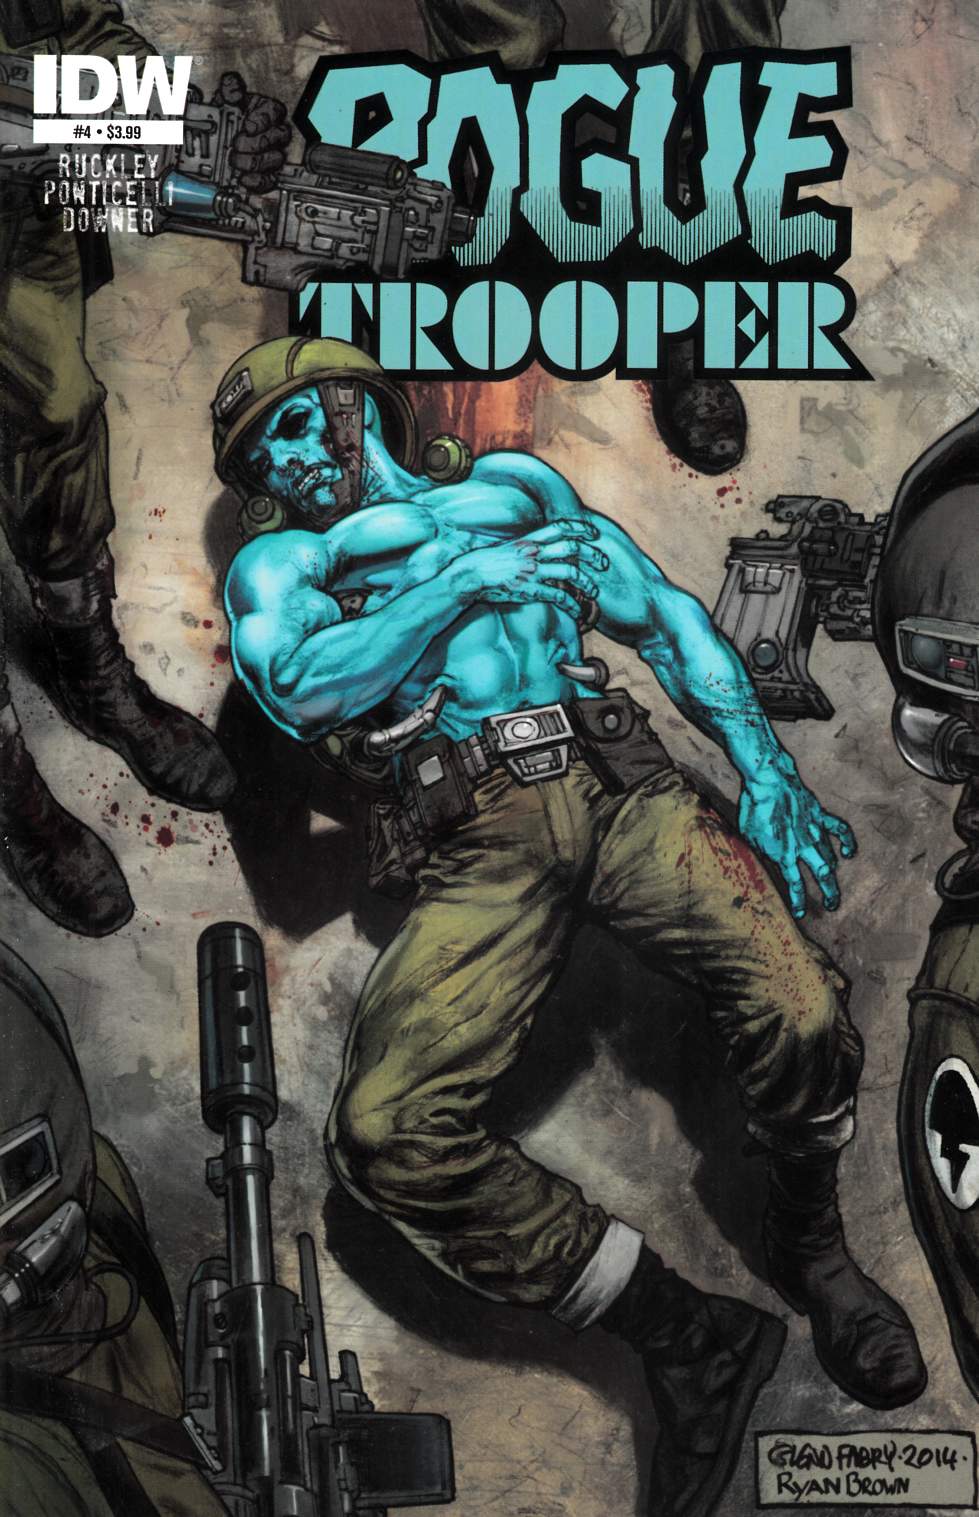 rogue trooper comic cover